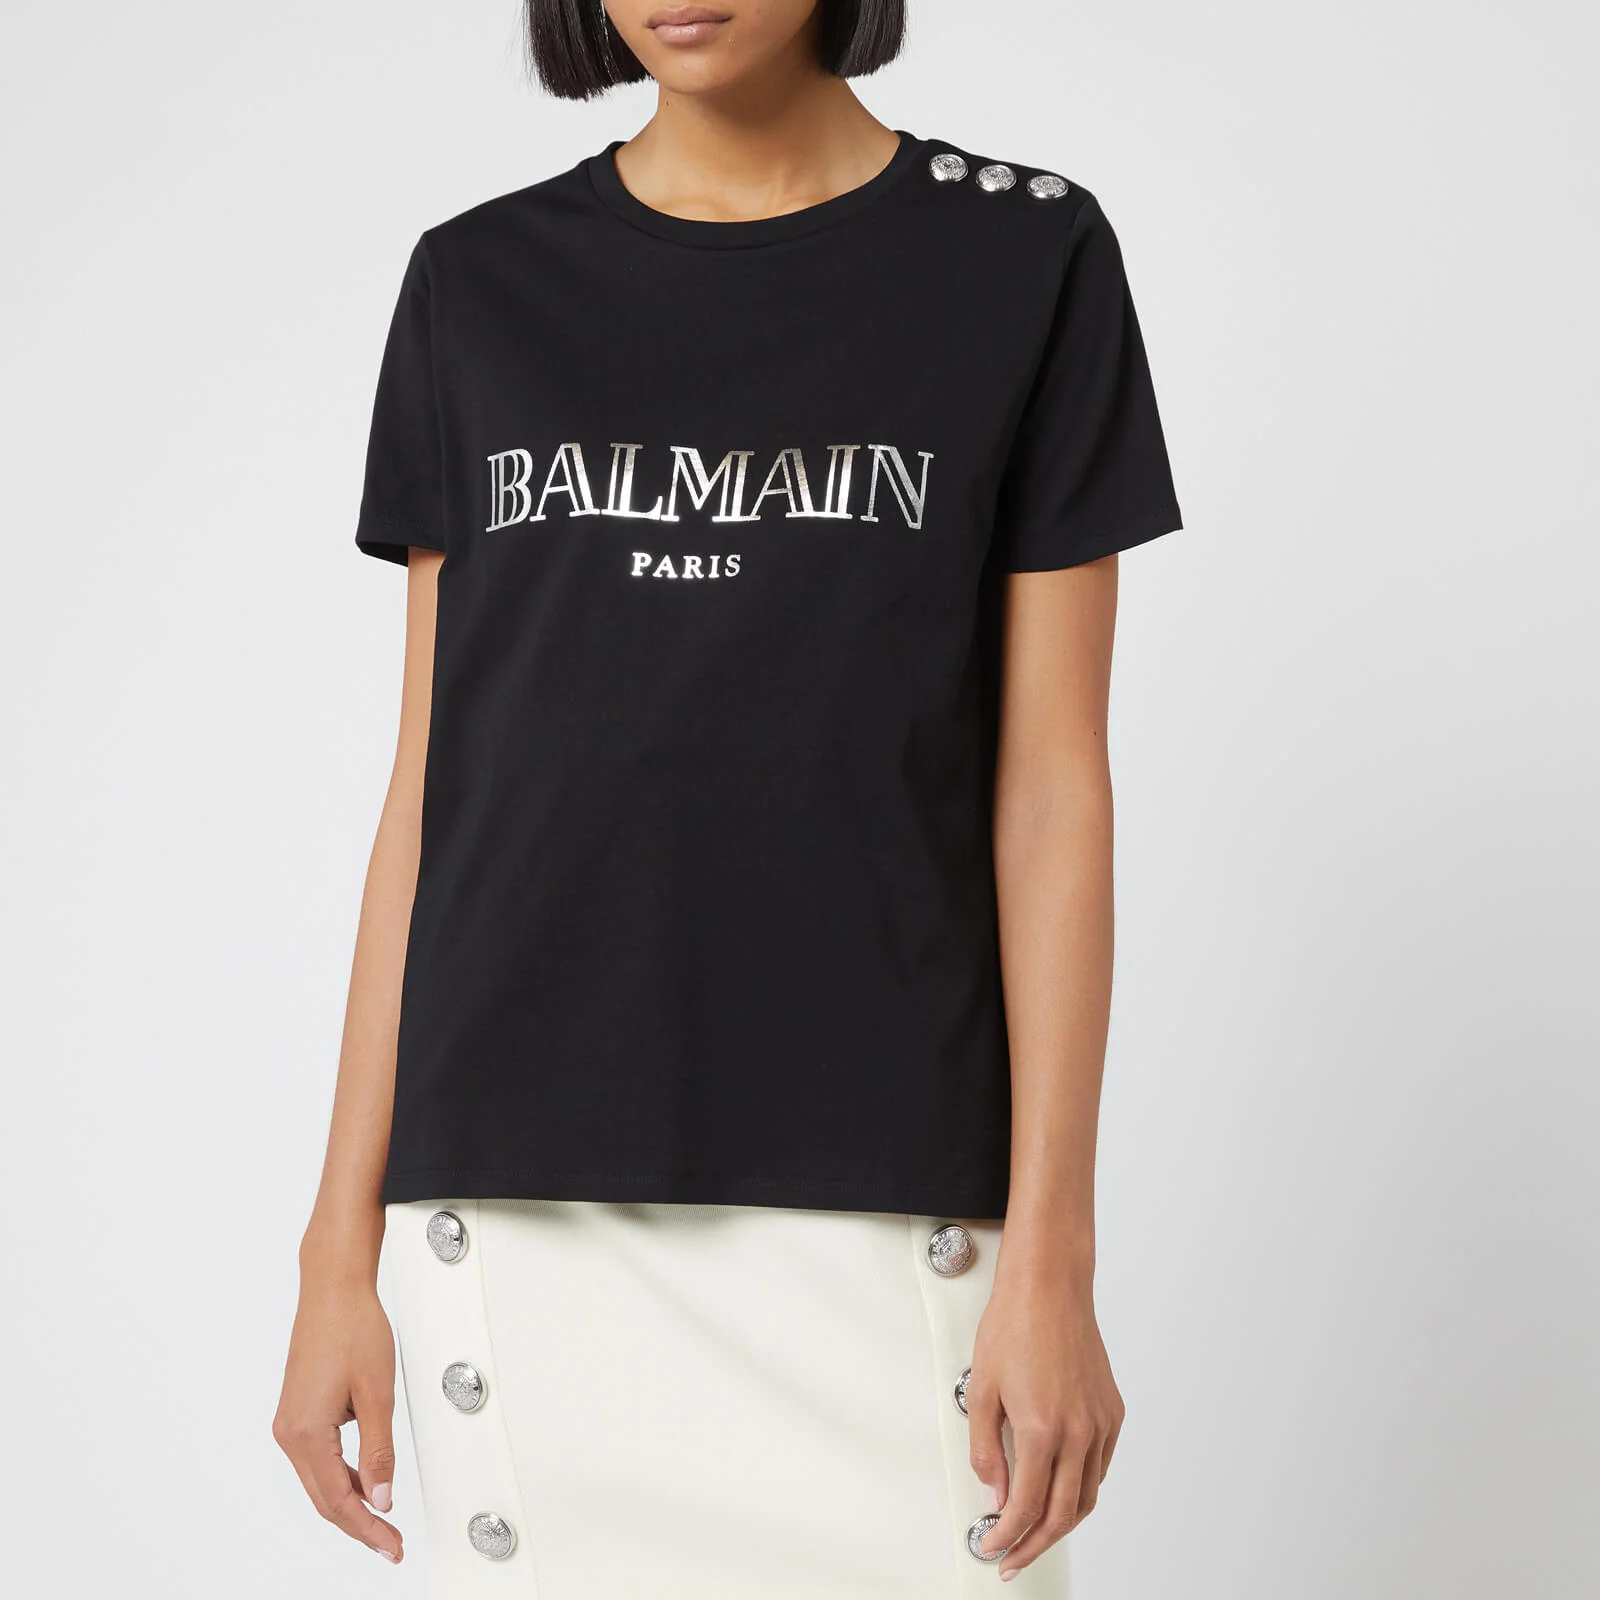 Balmain Women's Logo T-Shirt - Black Image 1